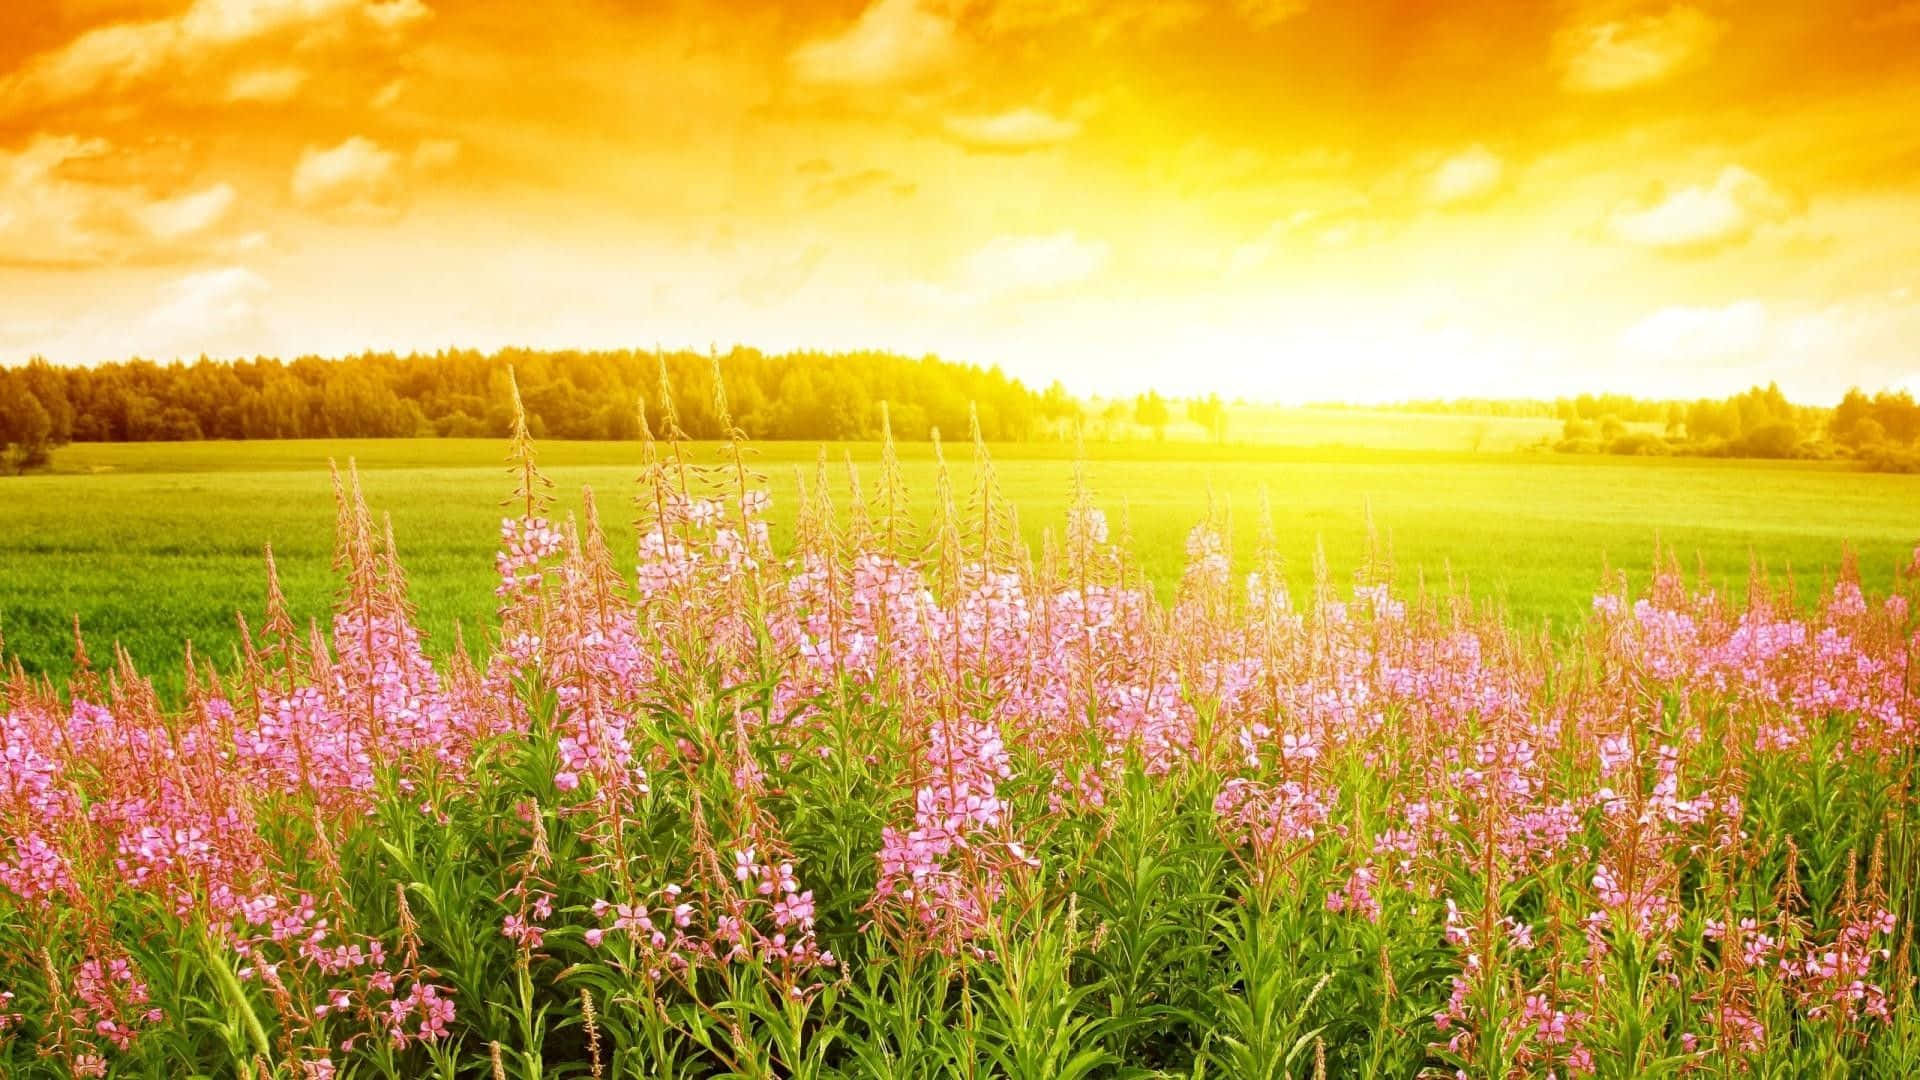 Spring Season Flowers Grass Field Morning Sunrise Background